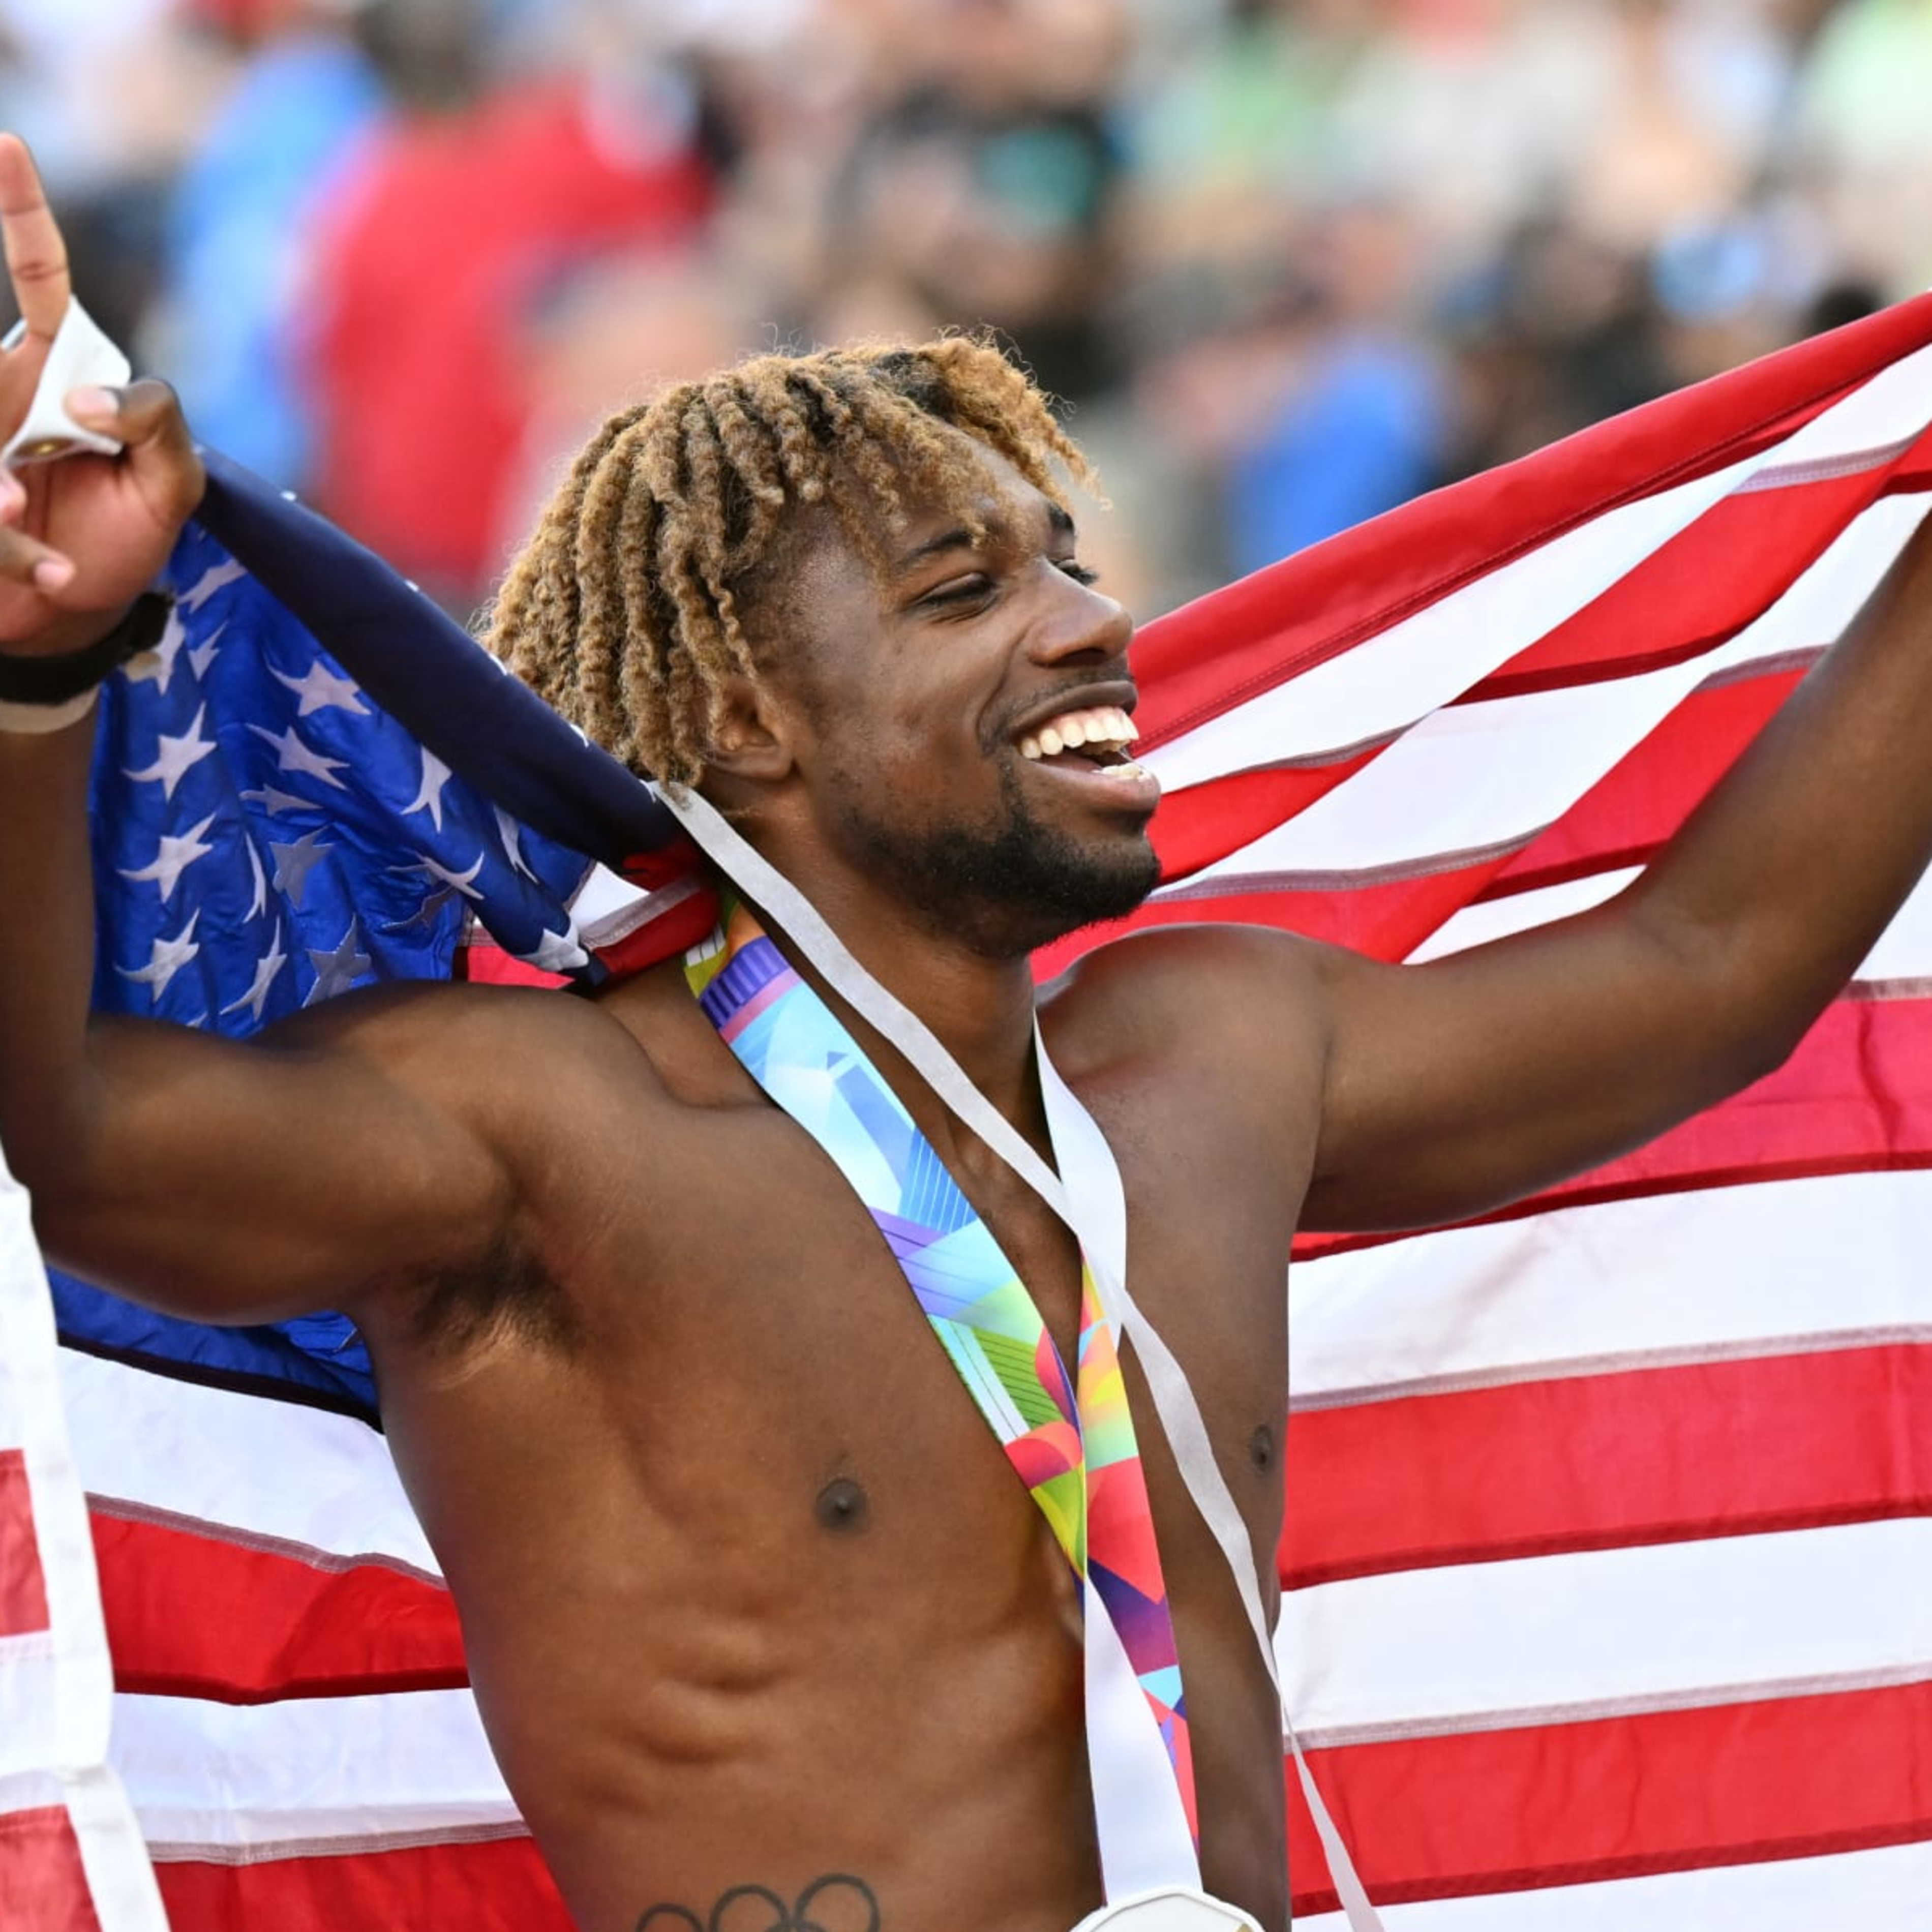 Noah Lyles Wins 200m Gold, Breaks Michael Johnson’s American Record at 19.31 Seconds